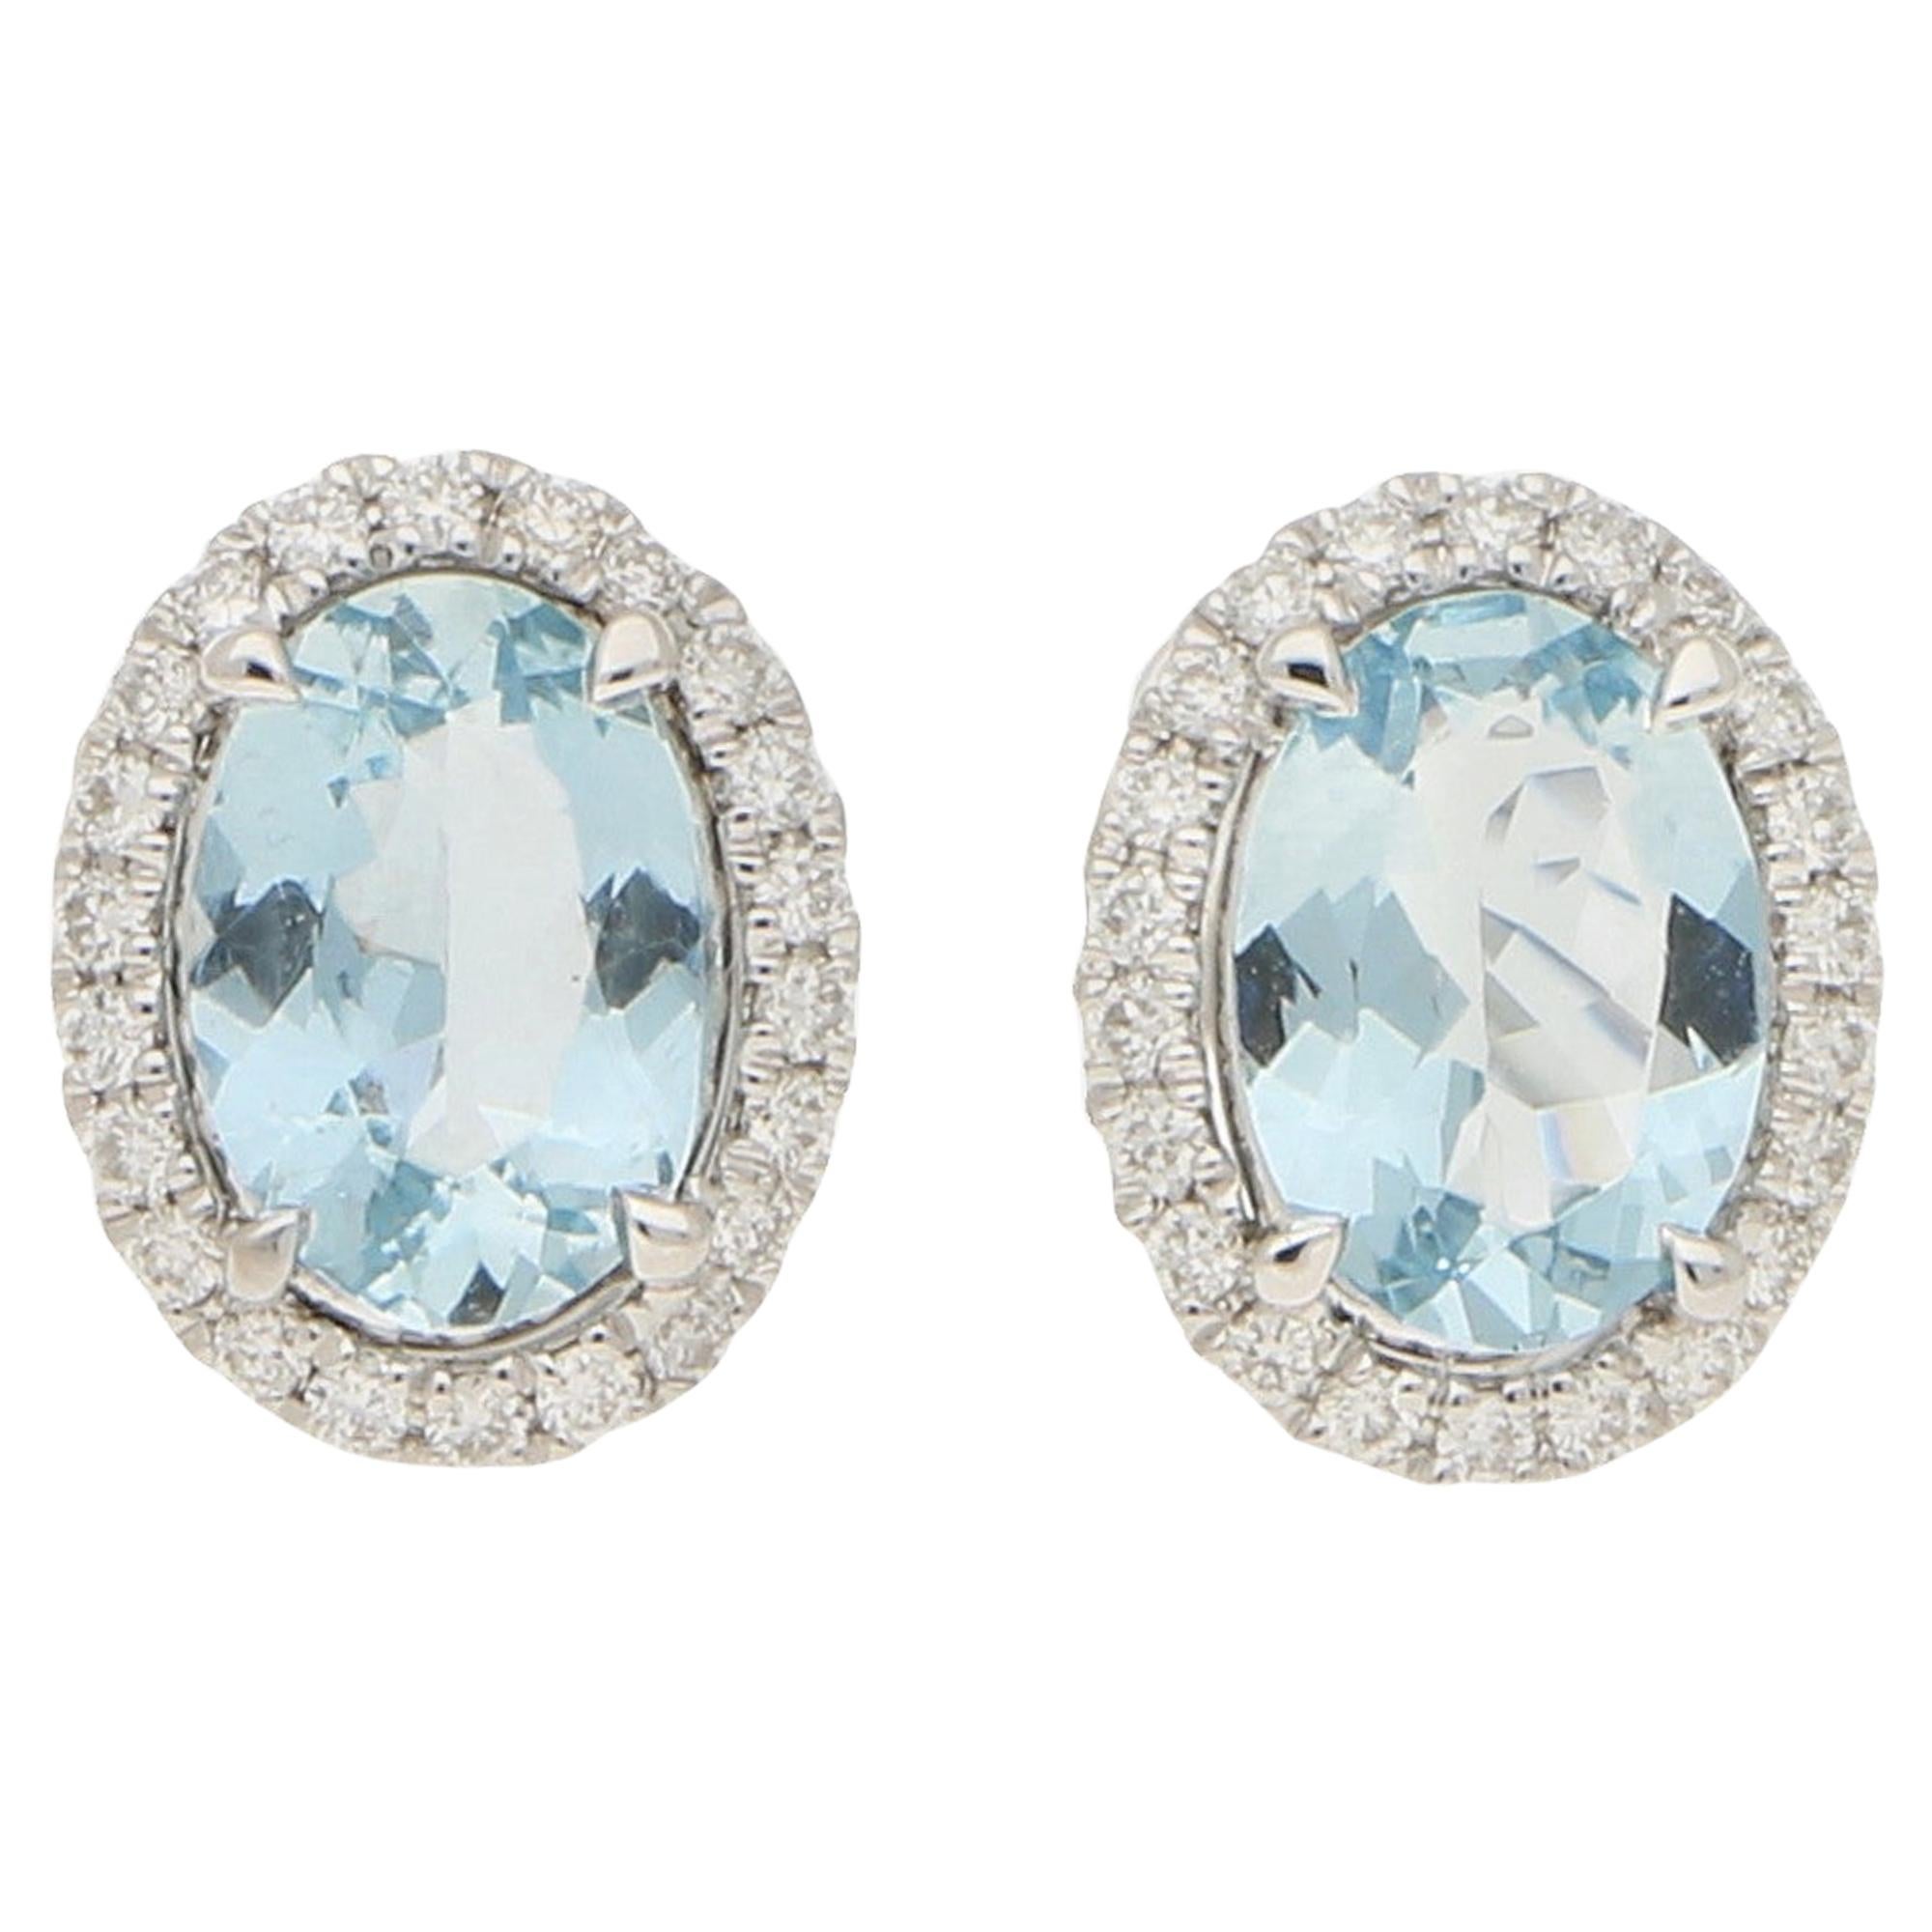 Small Aquamarine and Diamond Halo Stud Earrings Set in 18 Karat White Gold